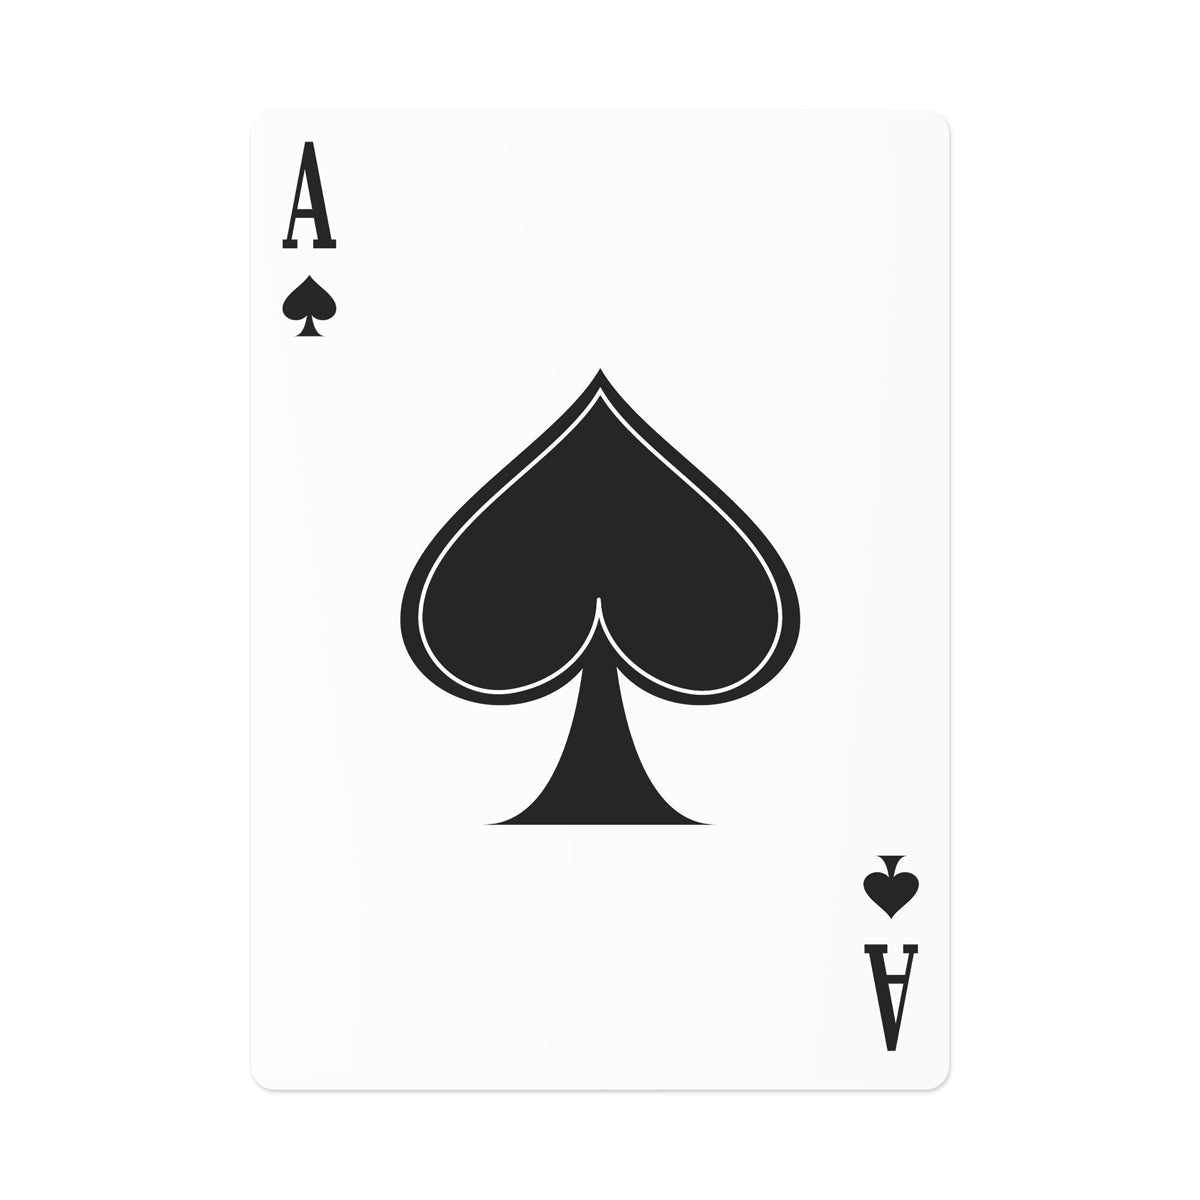 Landscape Dreamscape Poker Cards